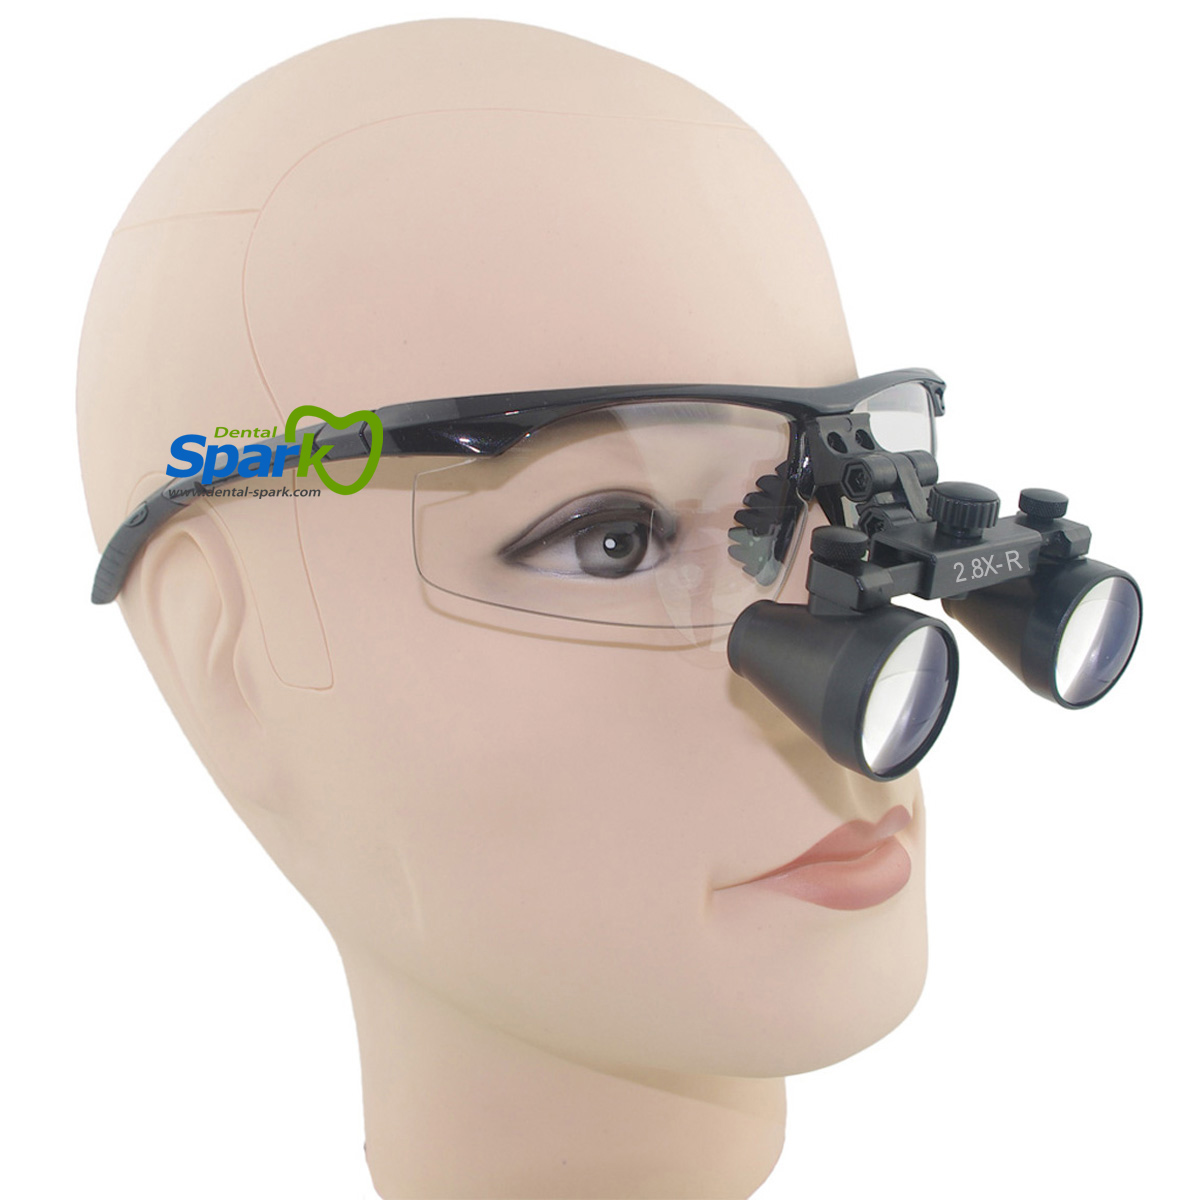 2.8 x Magnification Professional Dental Loupes by Spark Black BP Sports Frame and Adjustable Pupil Distance Model #SM2.8